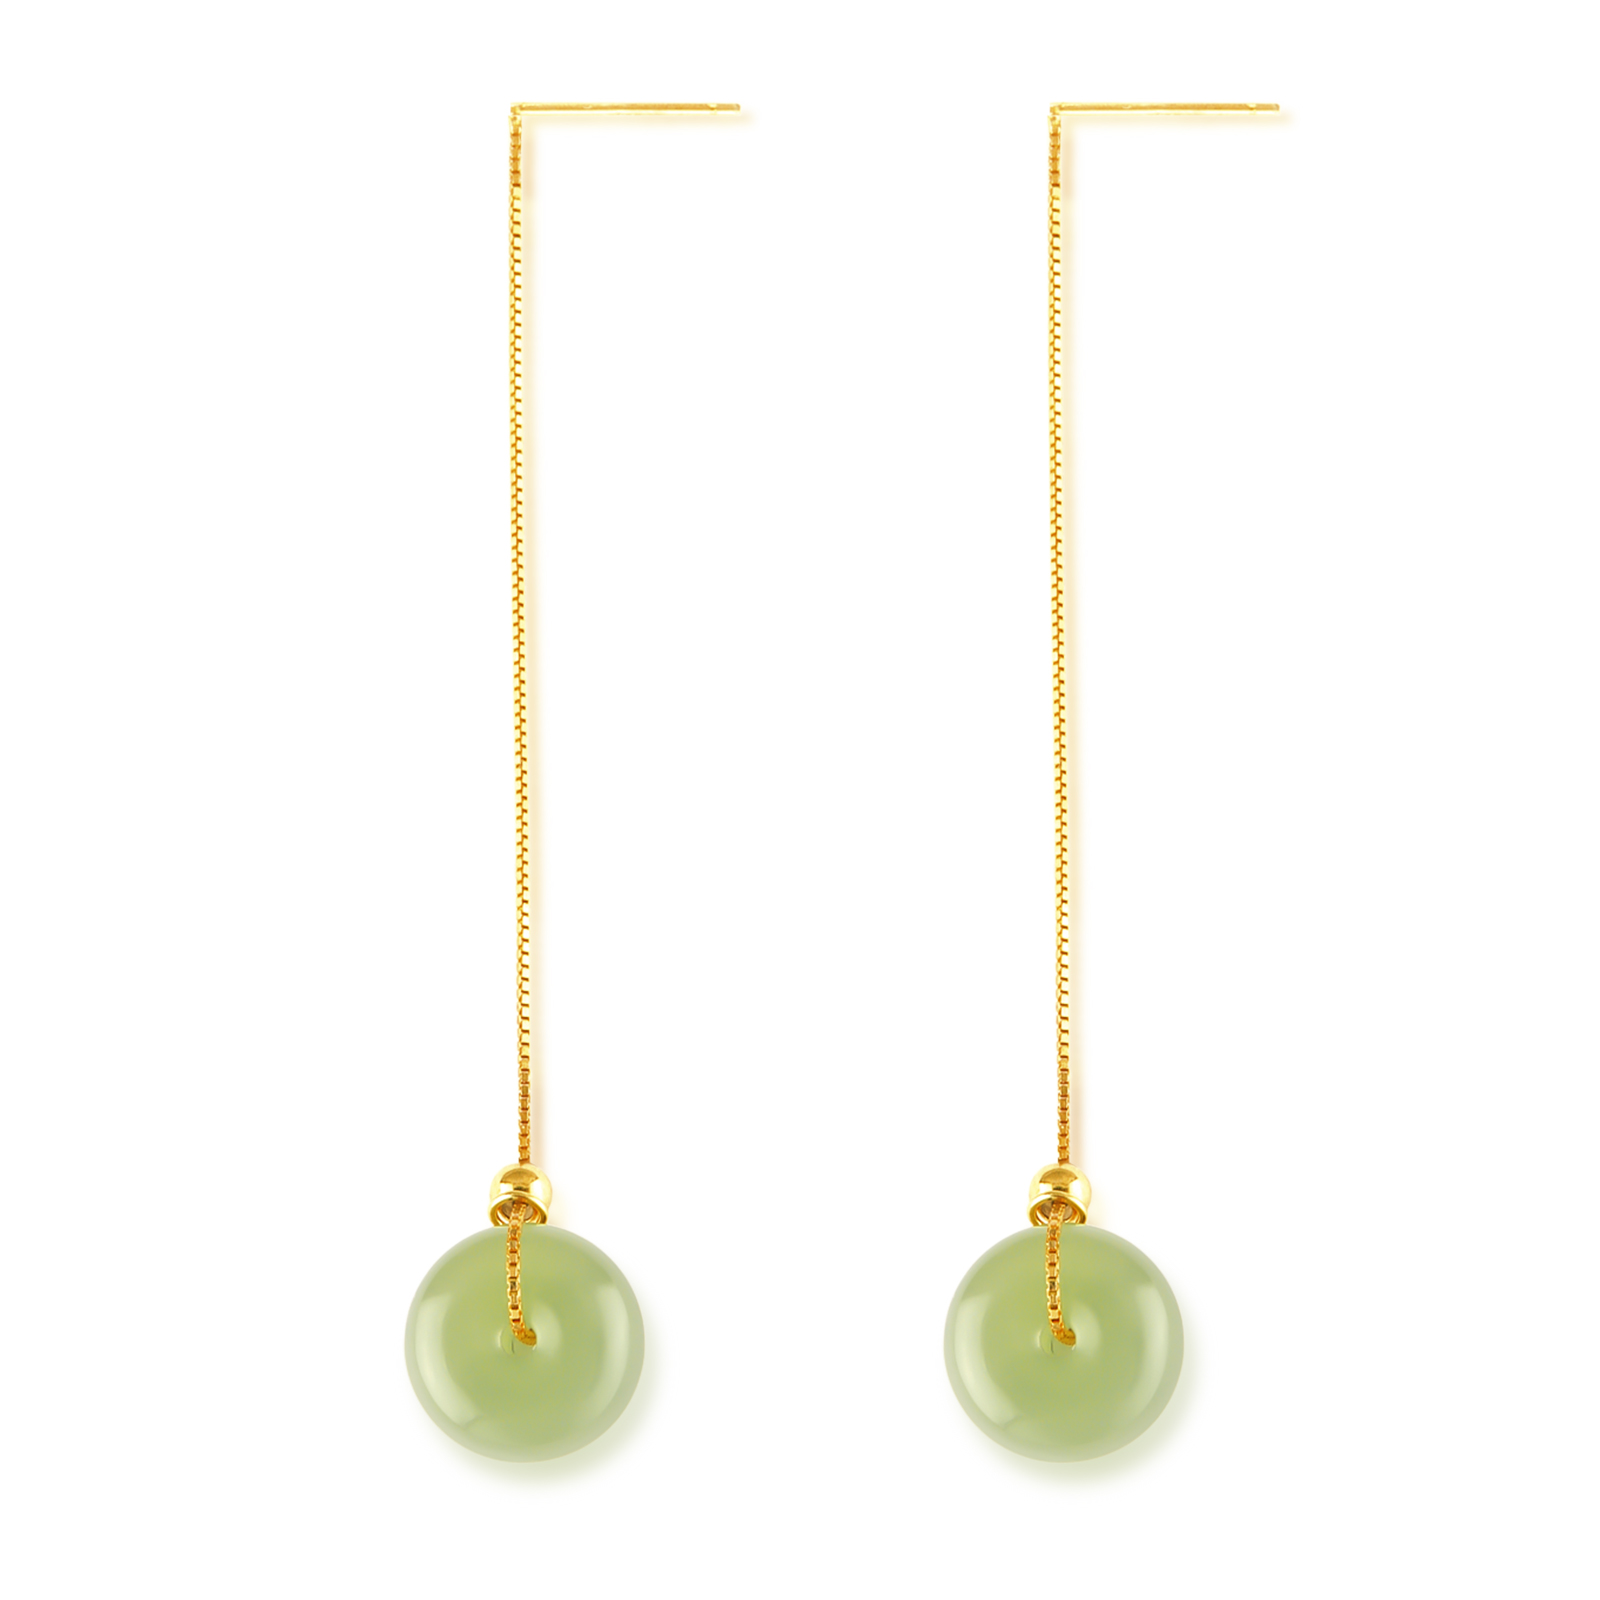 Daumier 14K Gold Filled Hetian Jade Dangling Earrings Handmade Natural Bead Pendant Drop Earrings Green Long Wire Bridal Jade Jewelry St Patricks Day Earrings Birthday Gift for Women